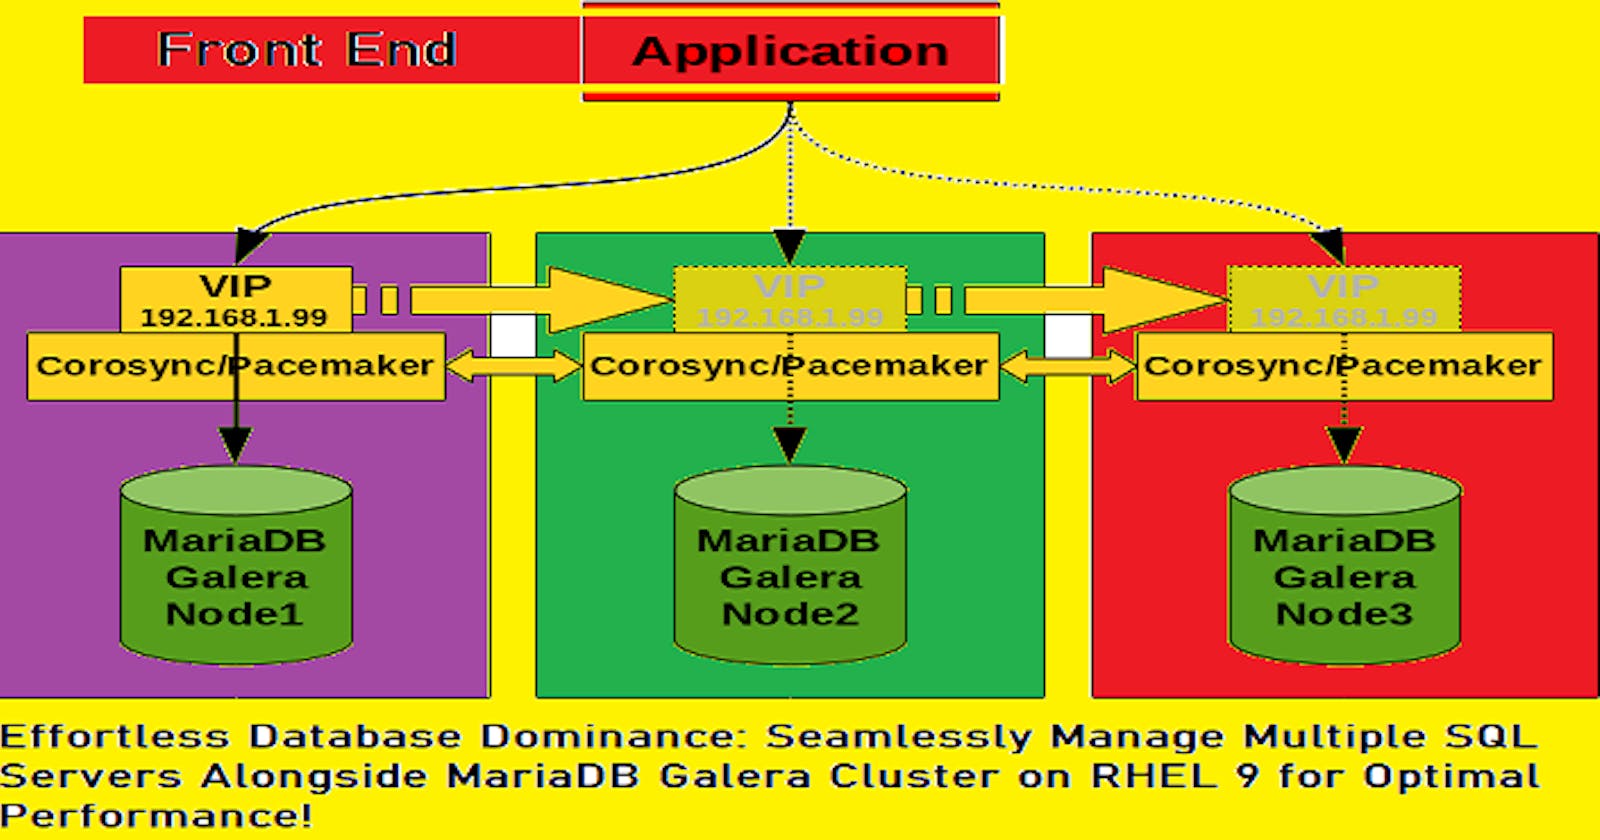 Effortless Database Dominance: Seamlessly Manage Multiple SQL Servers Alongside MariaDB Galera Cluster on RHEL 9 for Optimal Performance!